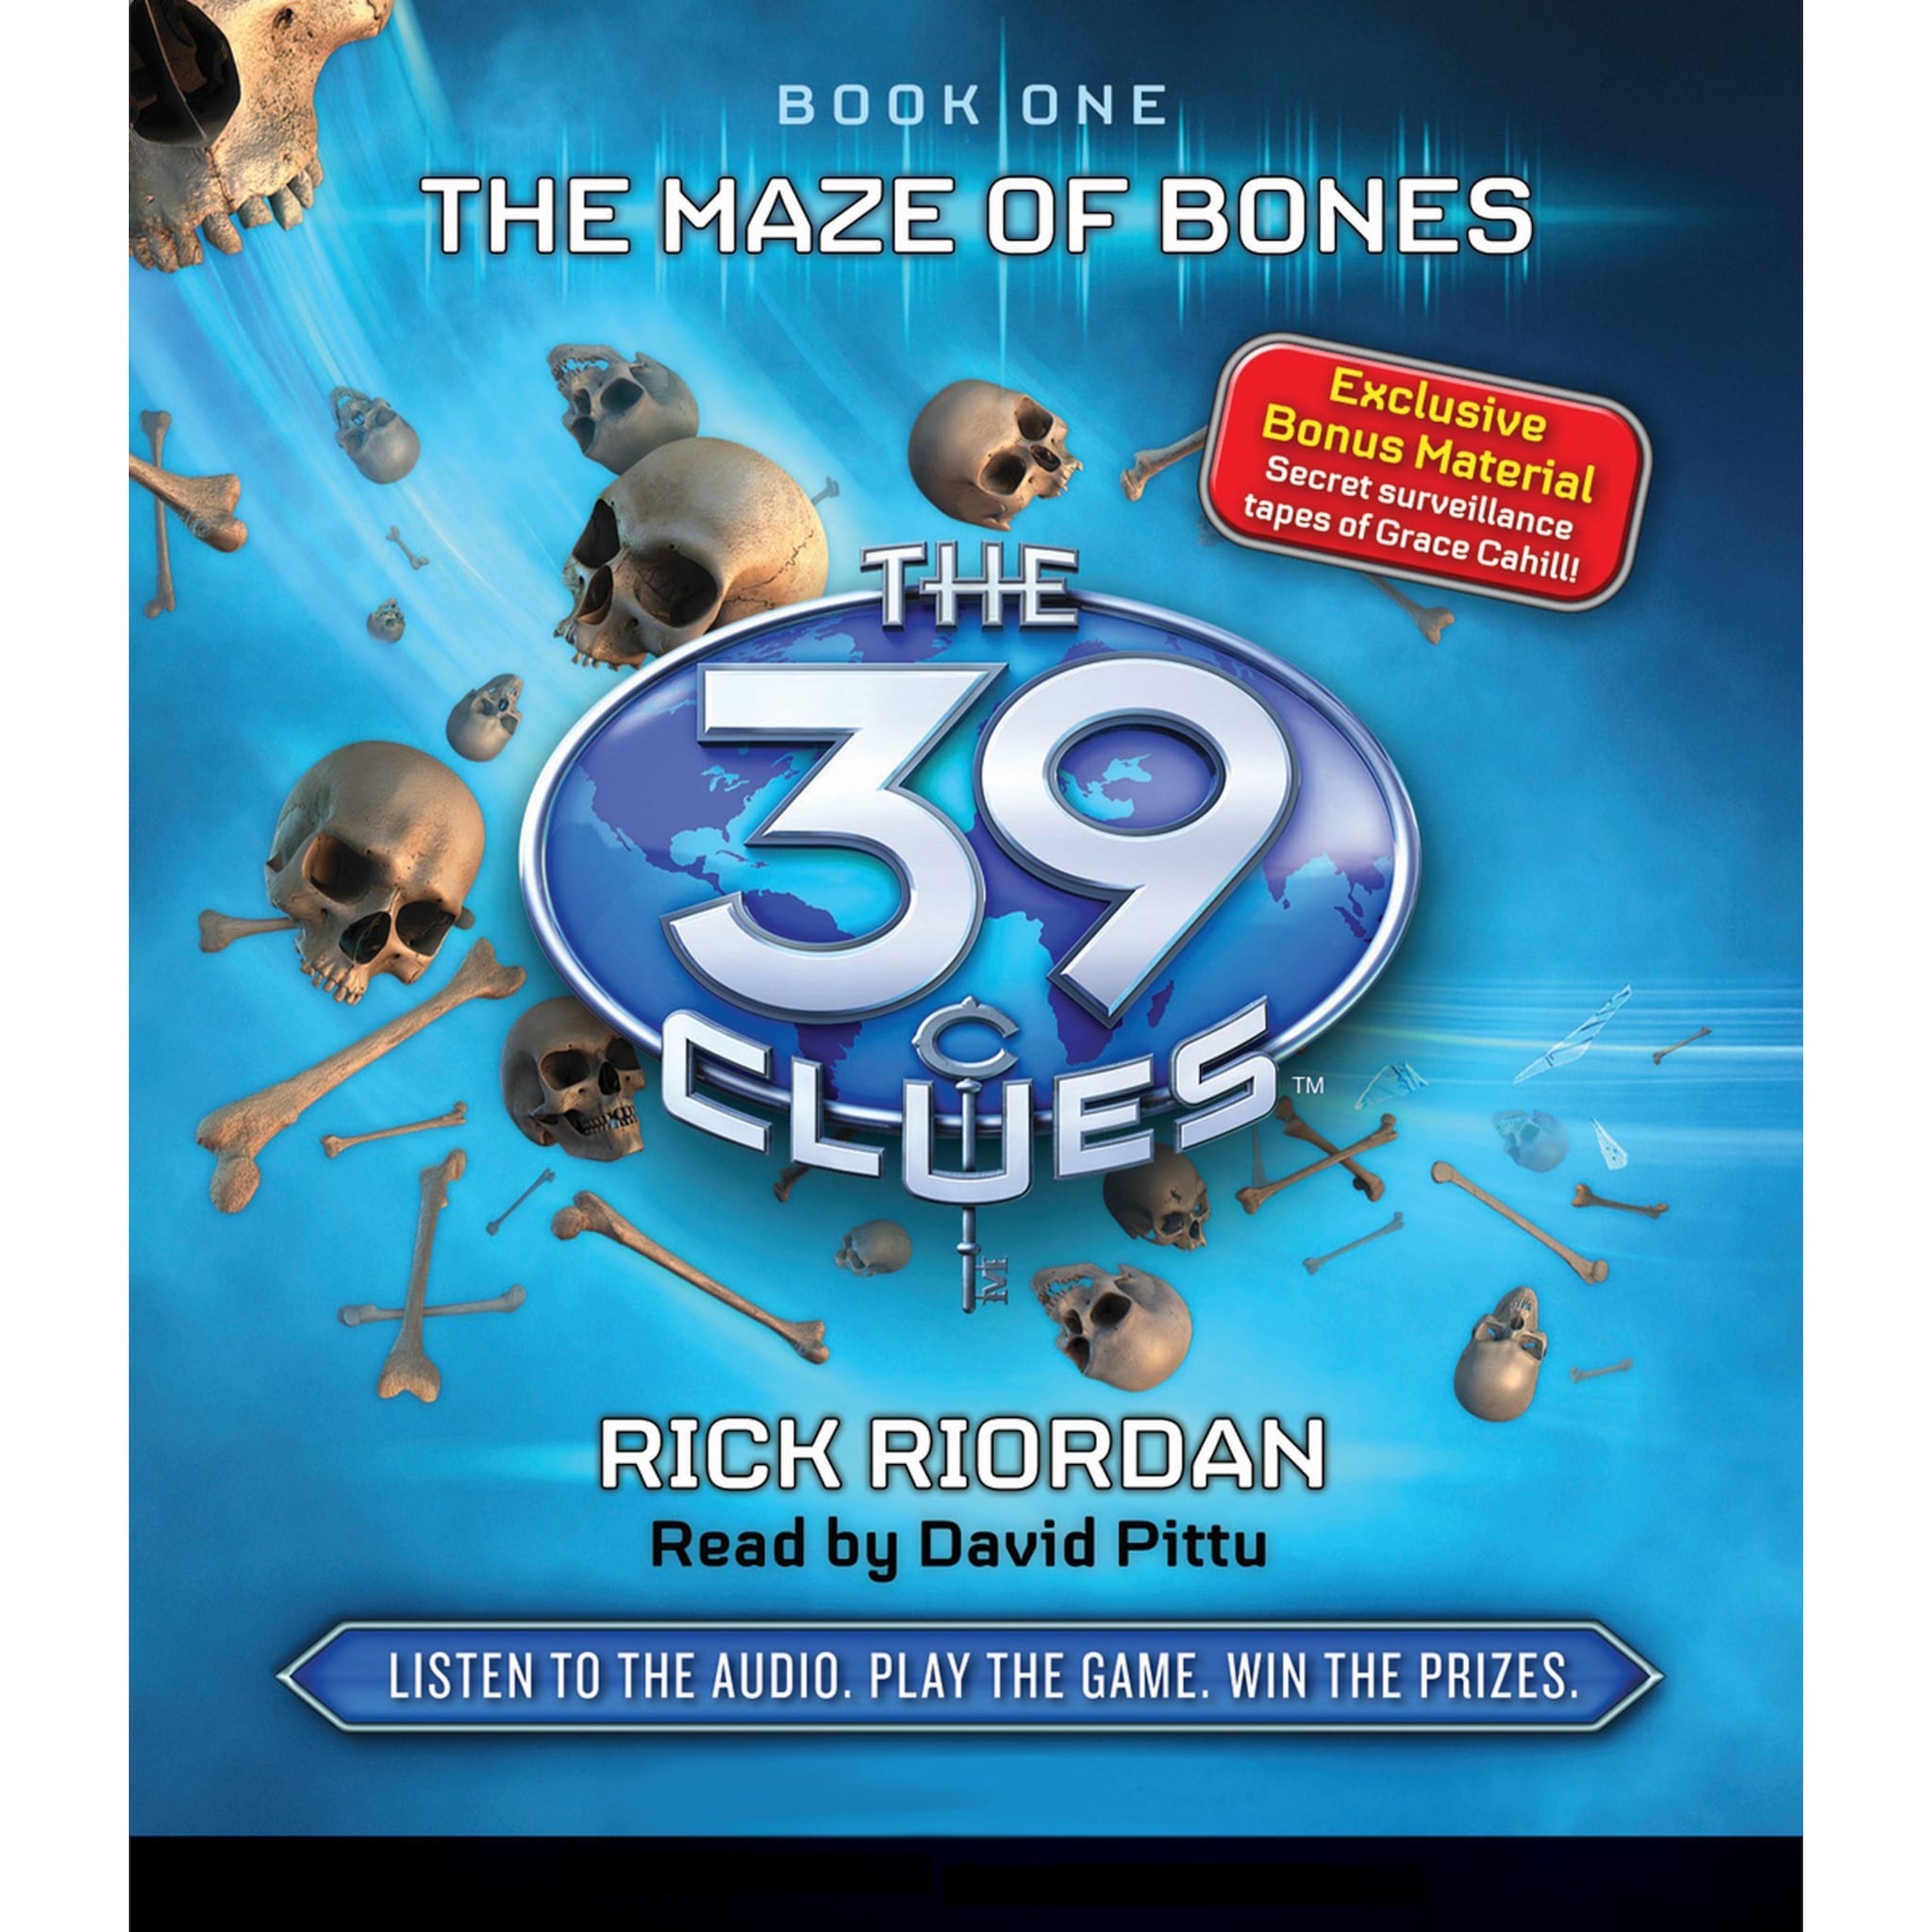 the 39 clues book 1 the maze of bones